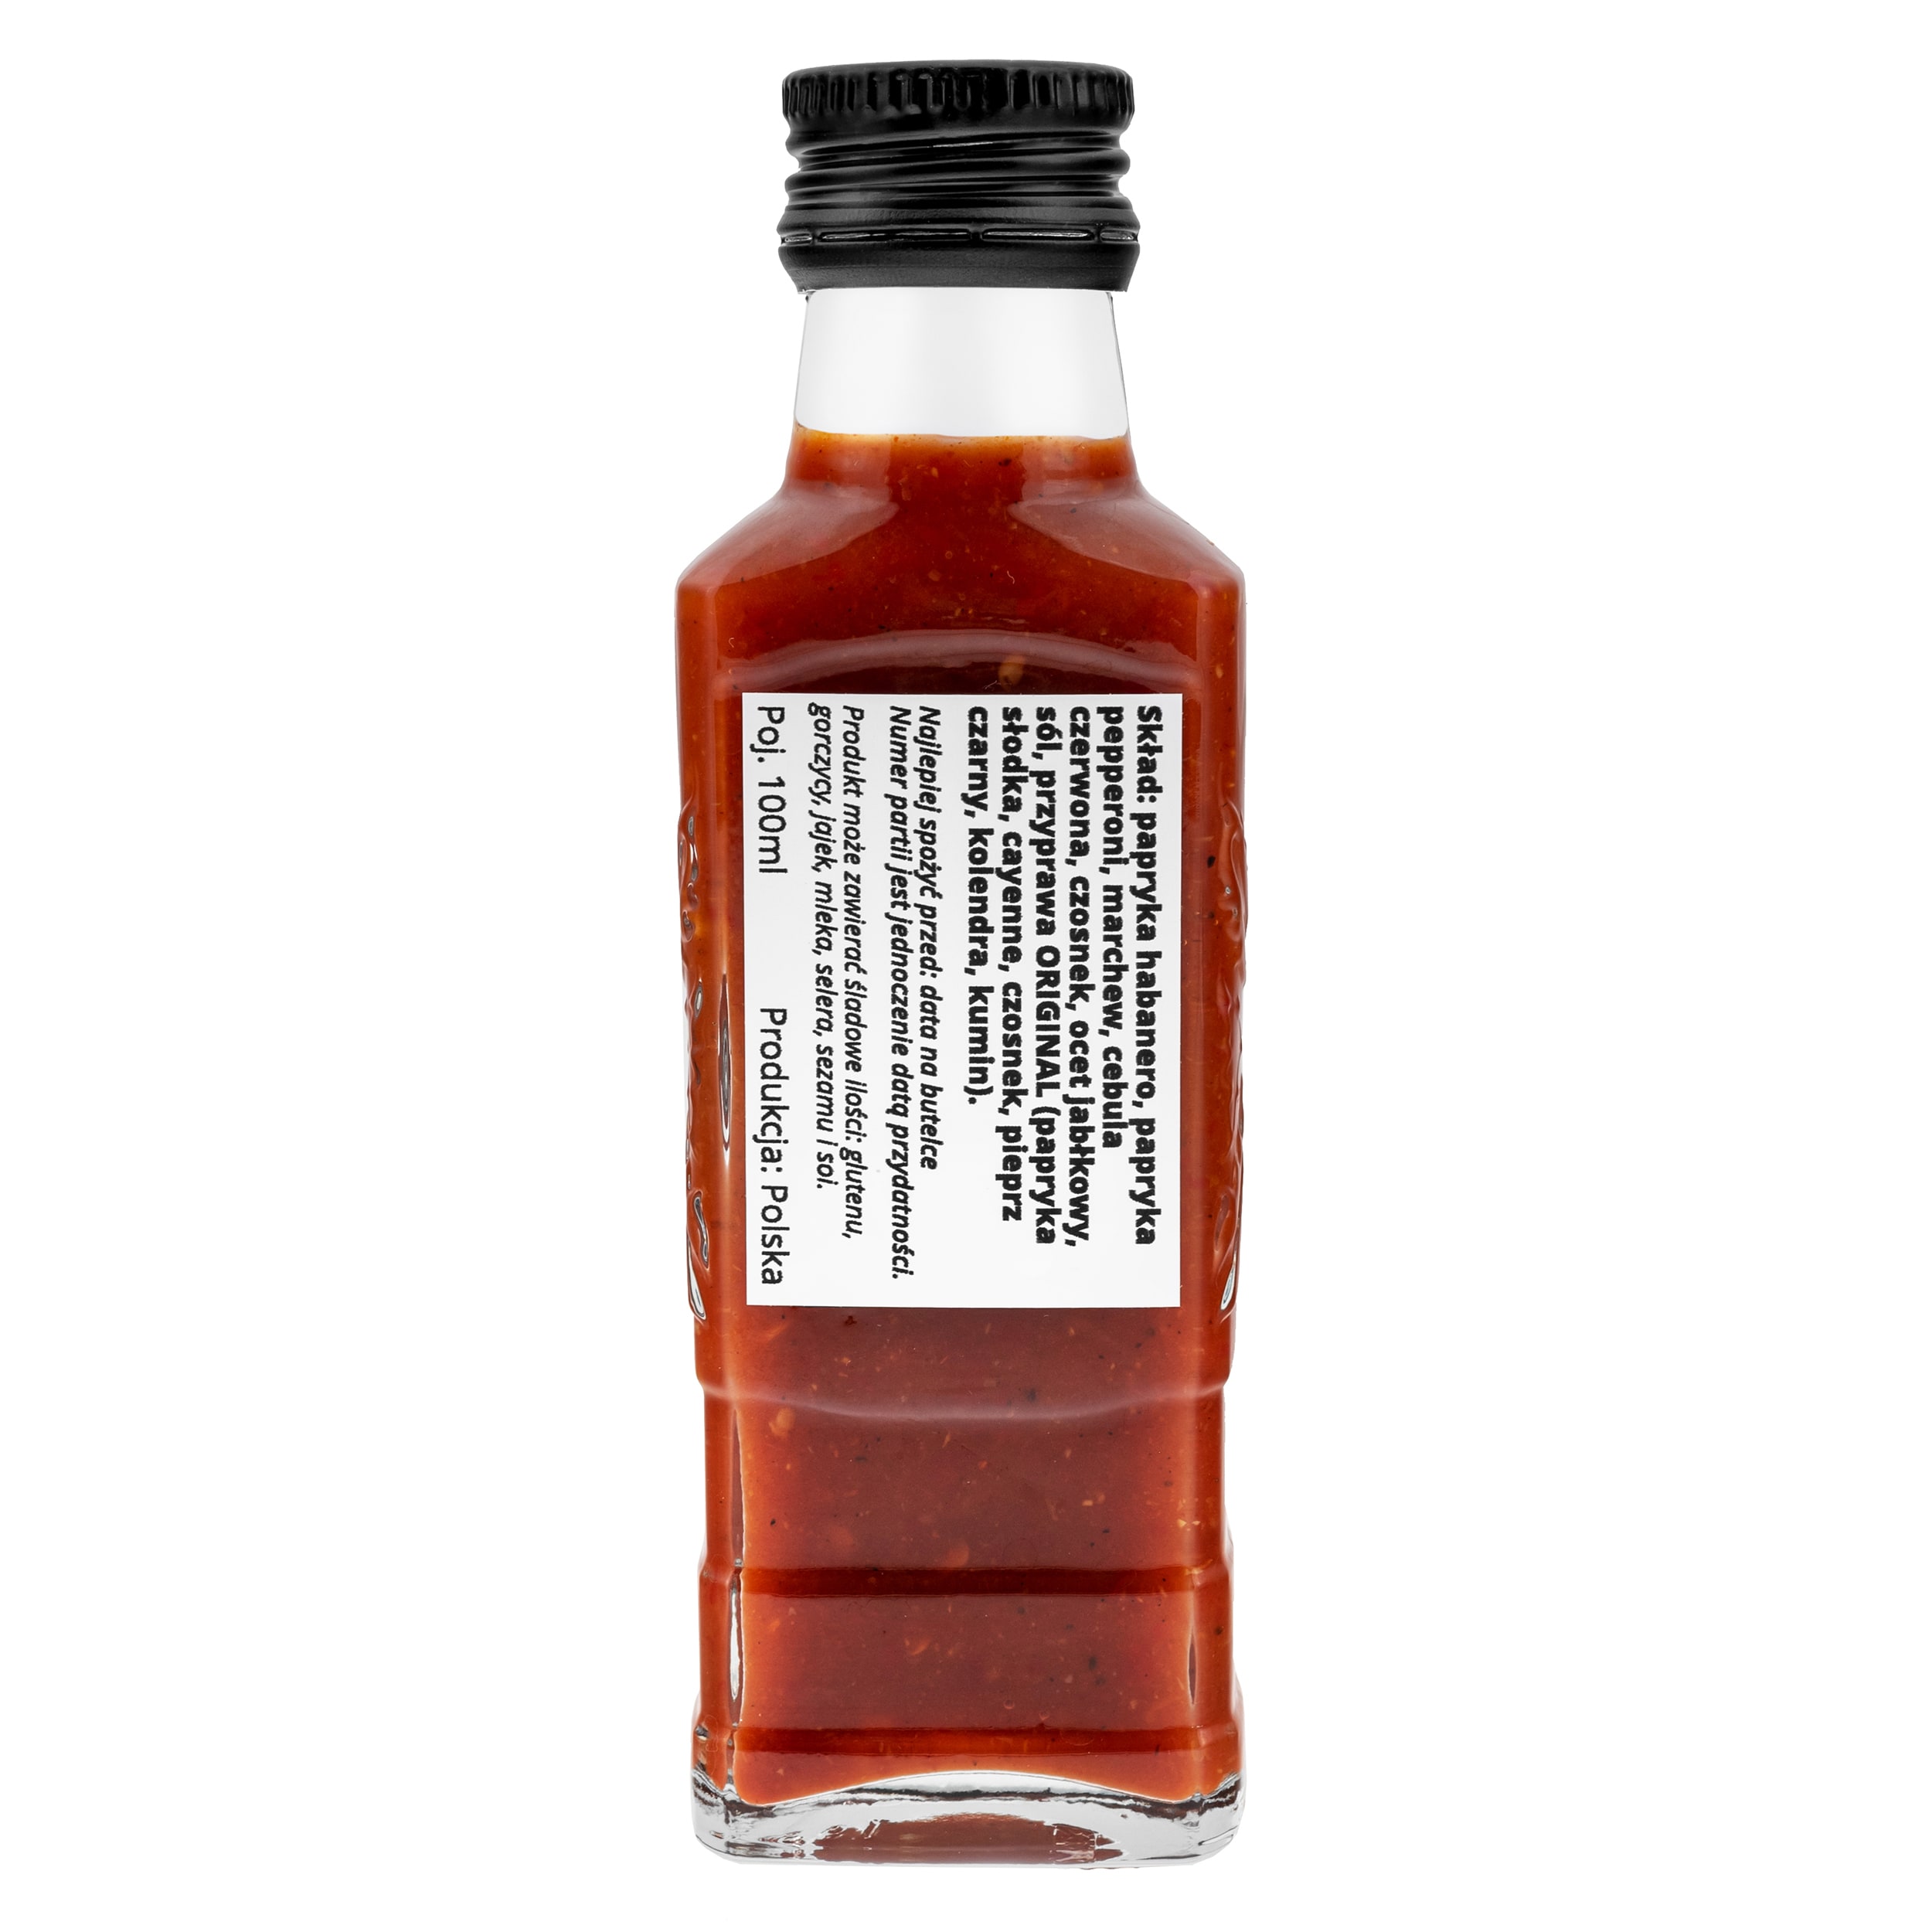 Соус Kuchnia Kwasiora Original Hot Sauce - 100 мл